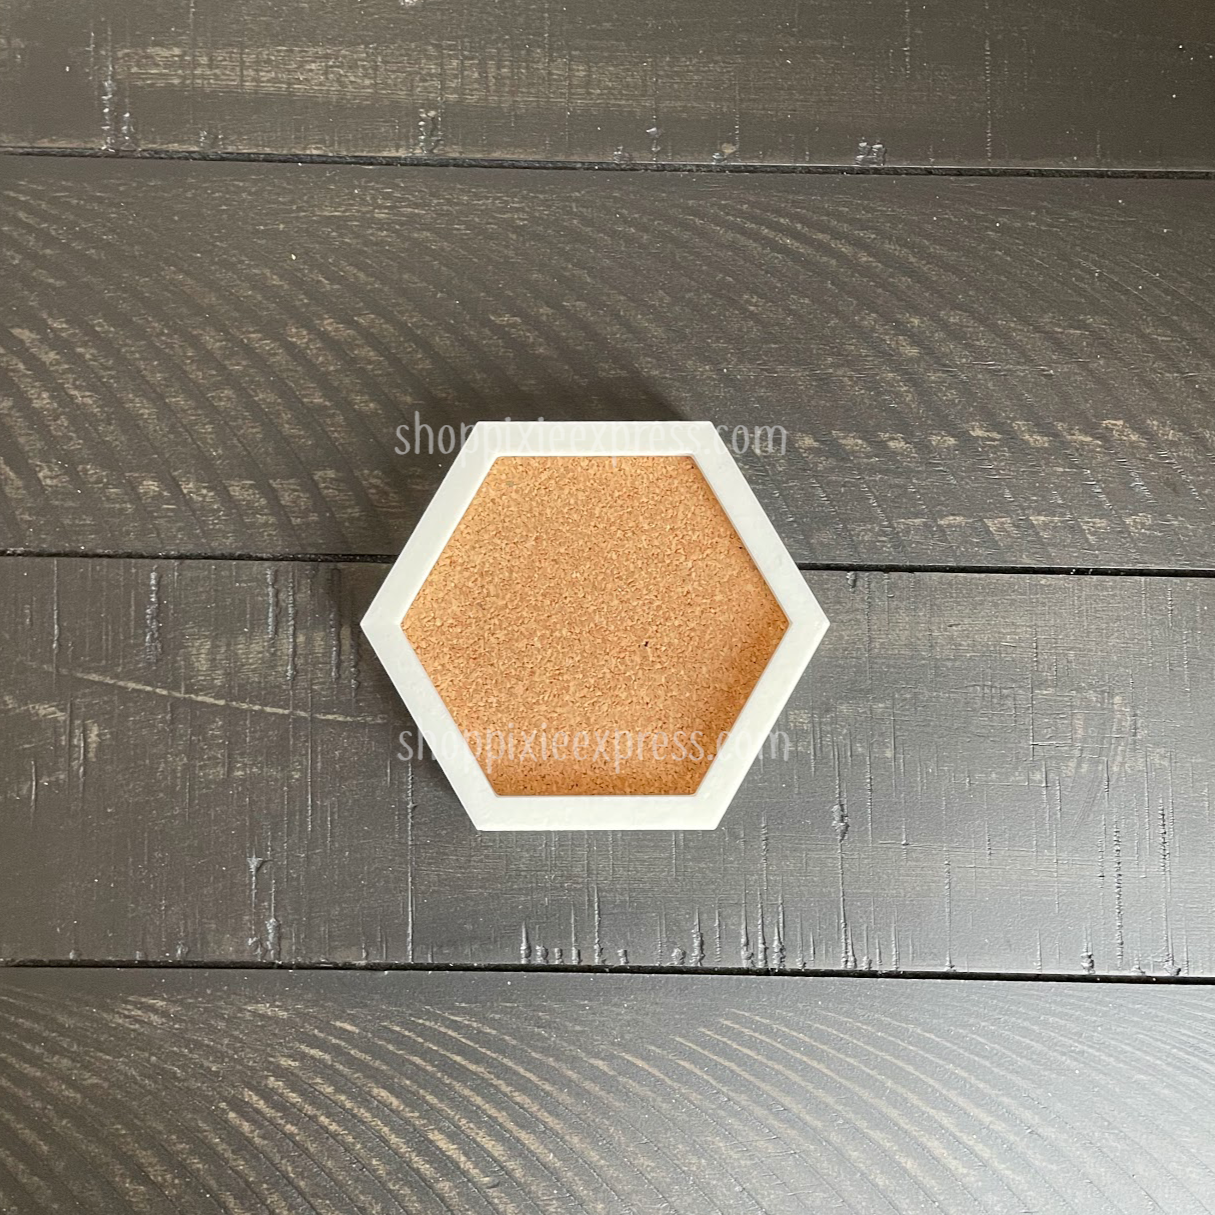 JENMV Hexagon Cork Board Tiles 5 Pack with Full Sticky Back- Mini